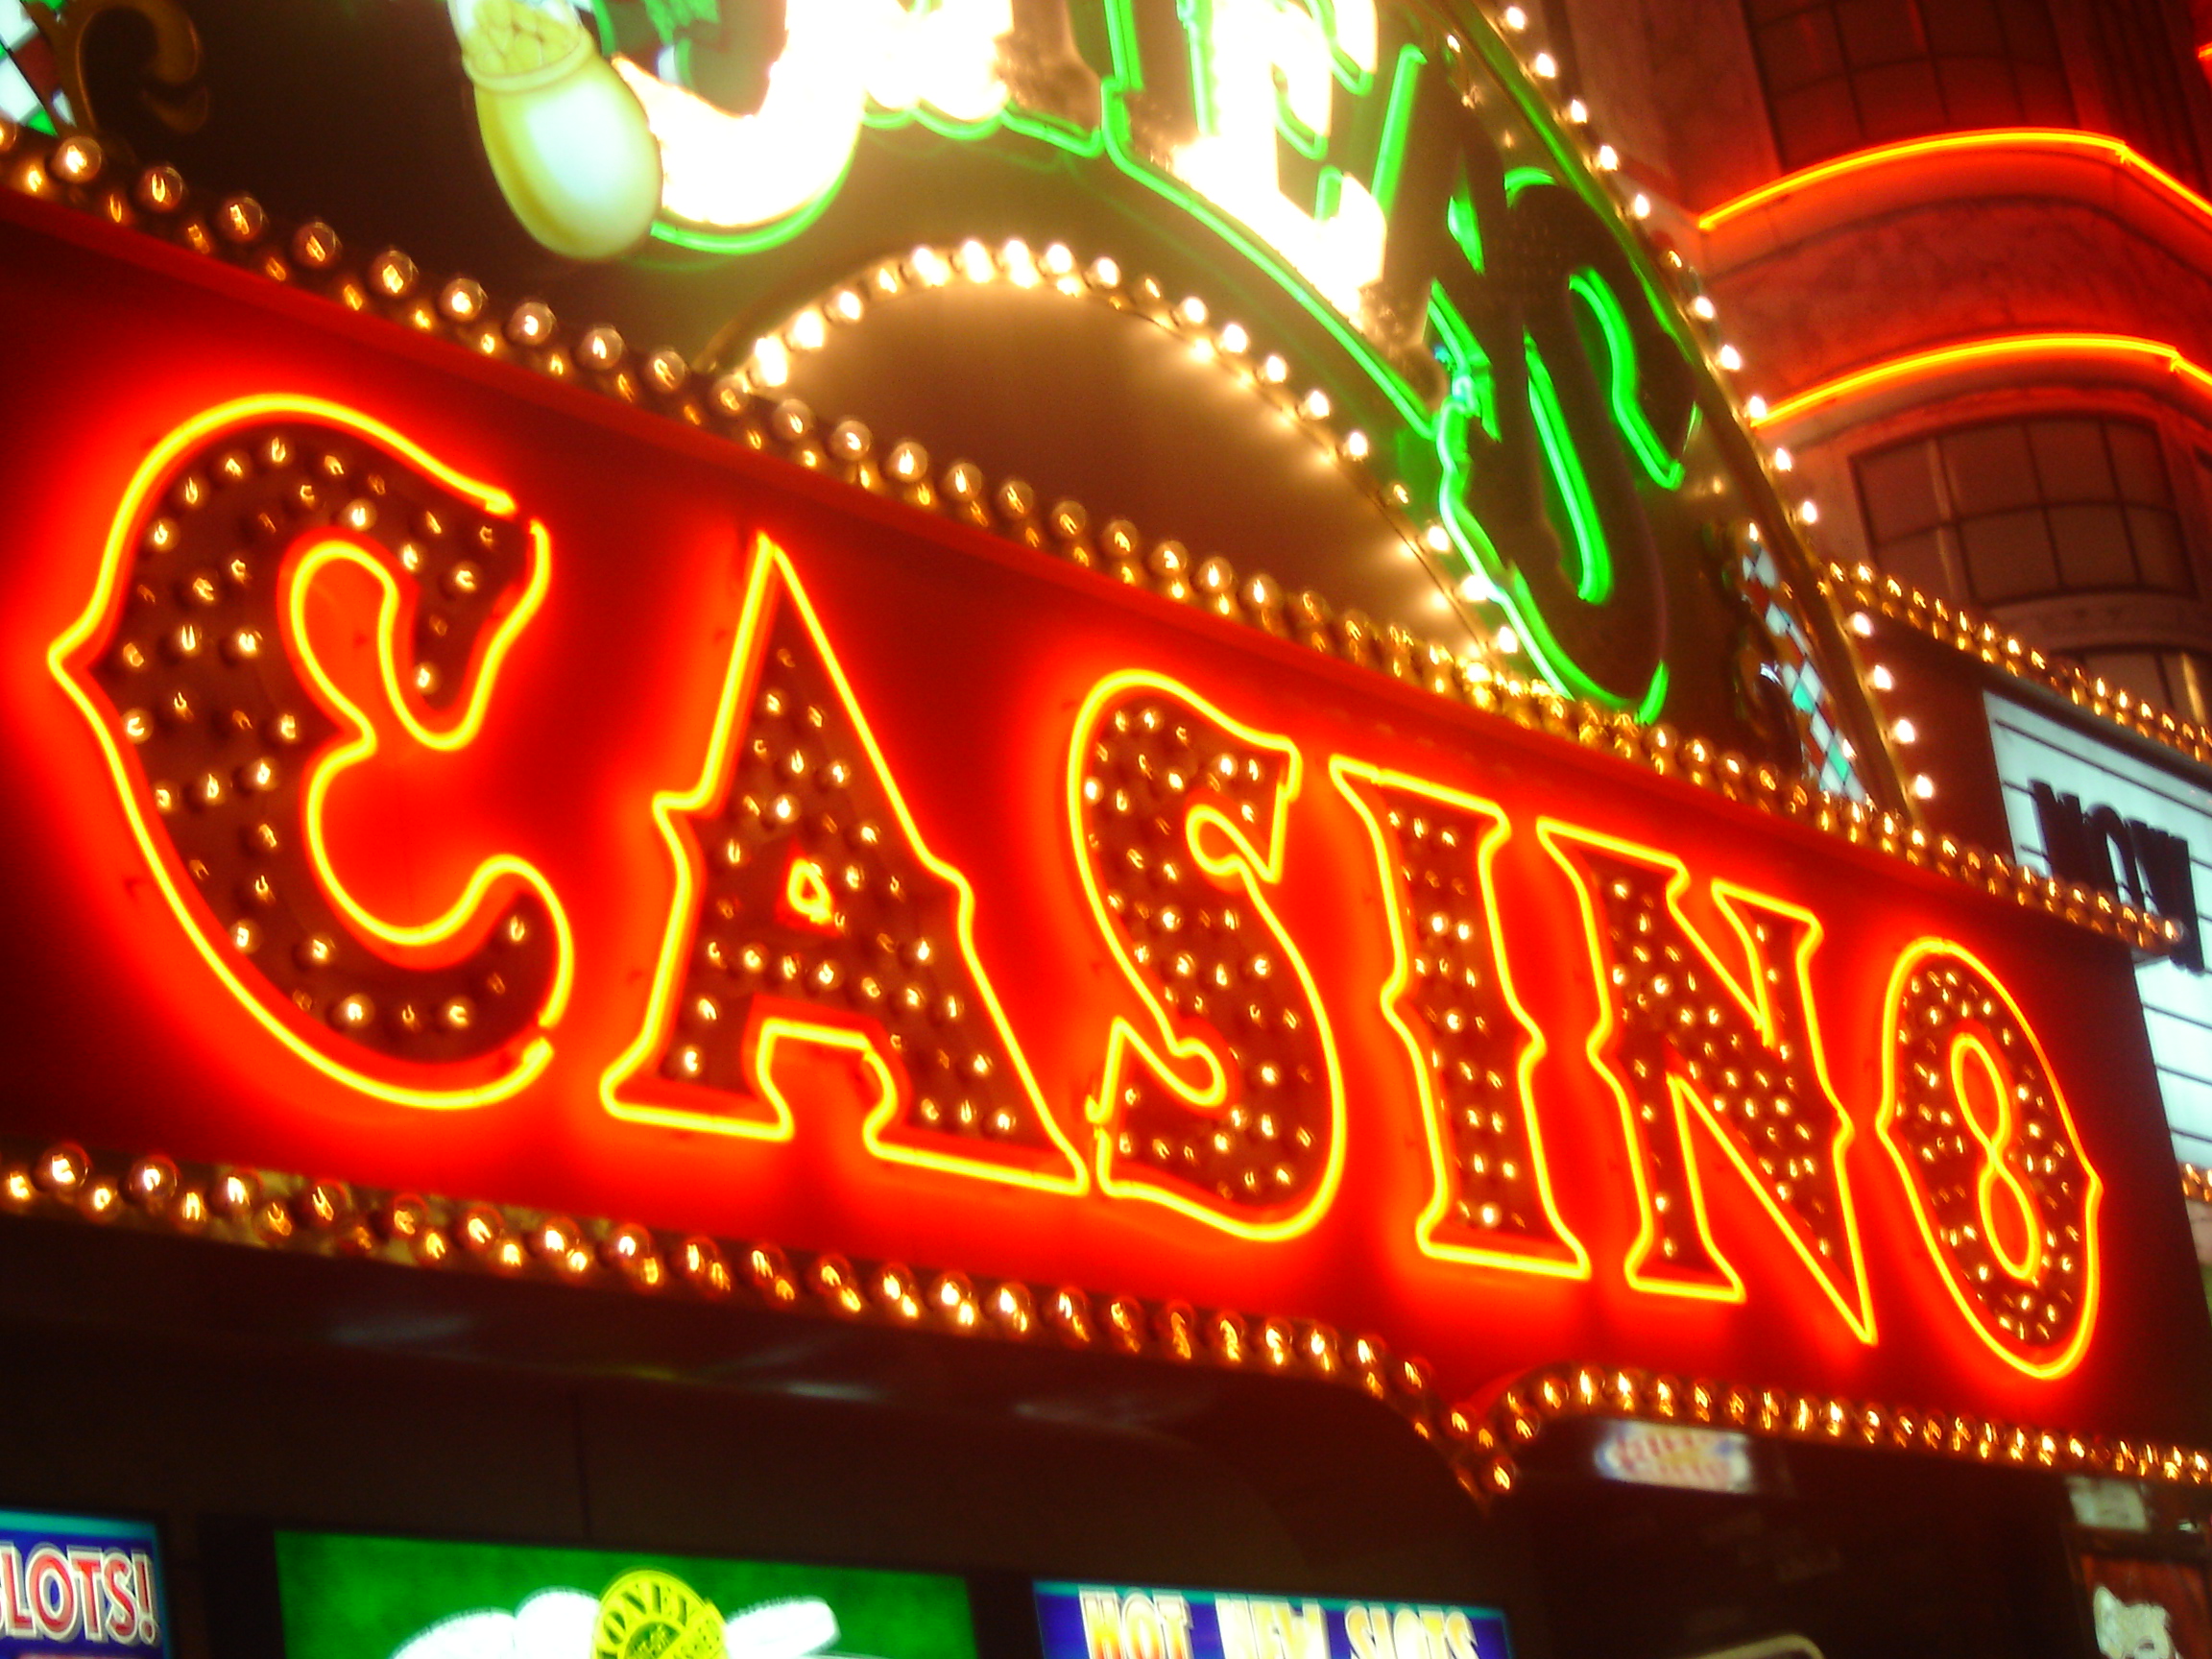 Casinos tiradas gratis sin depósito cerca de san petersburgo, rusia